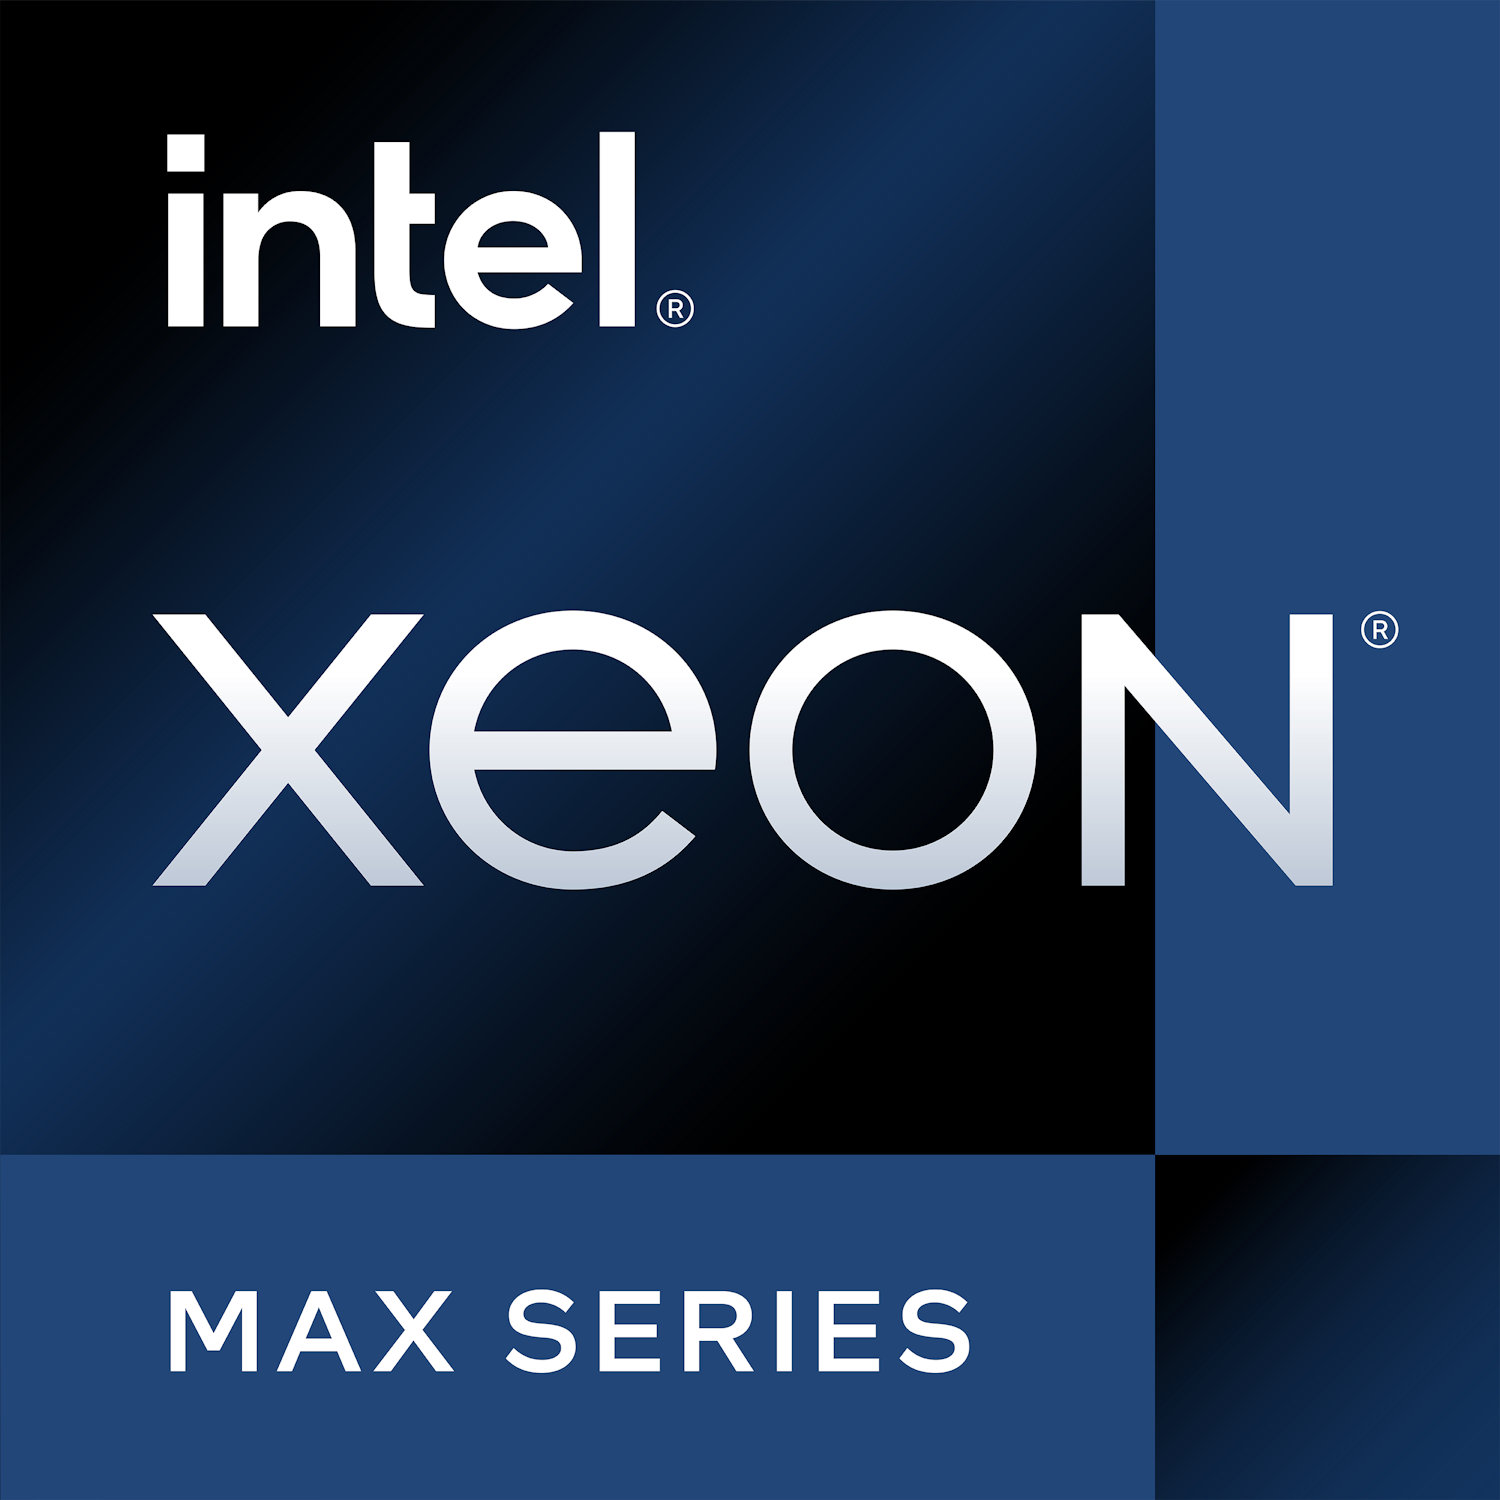 newsroom-intel-xeon-cpu-max-series-badge.jpg